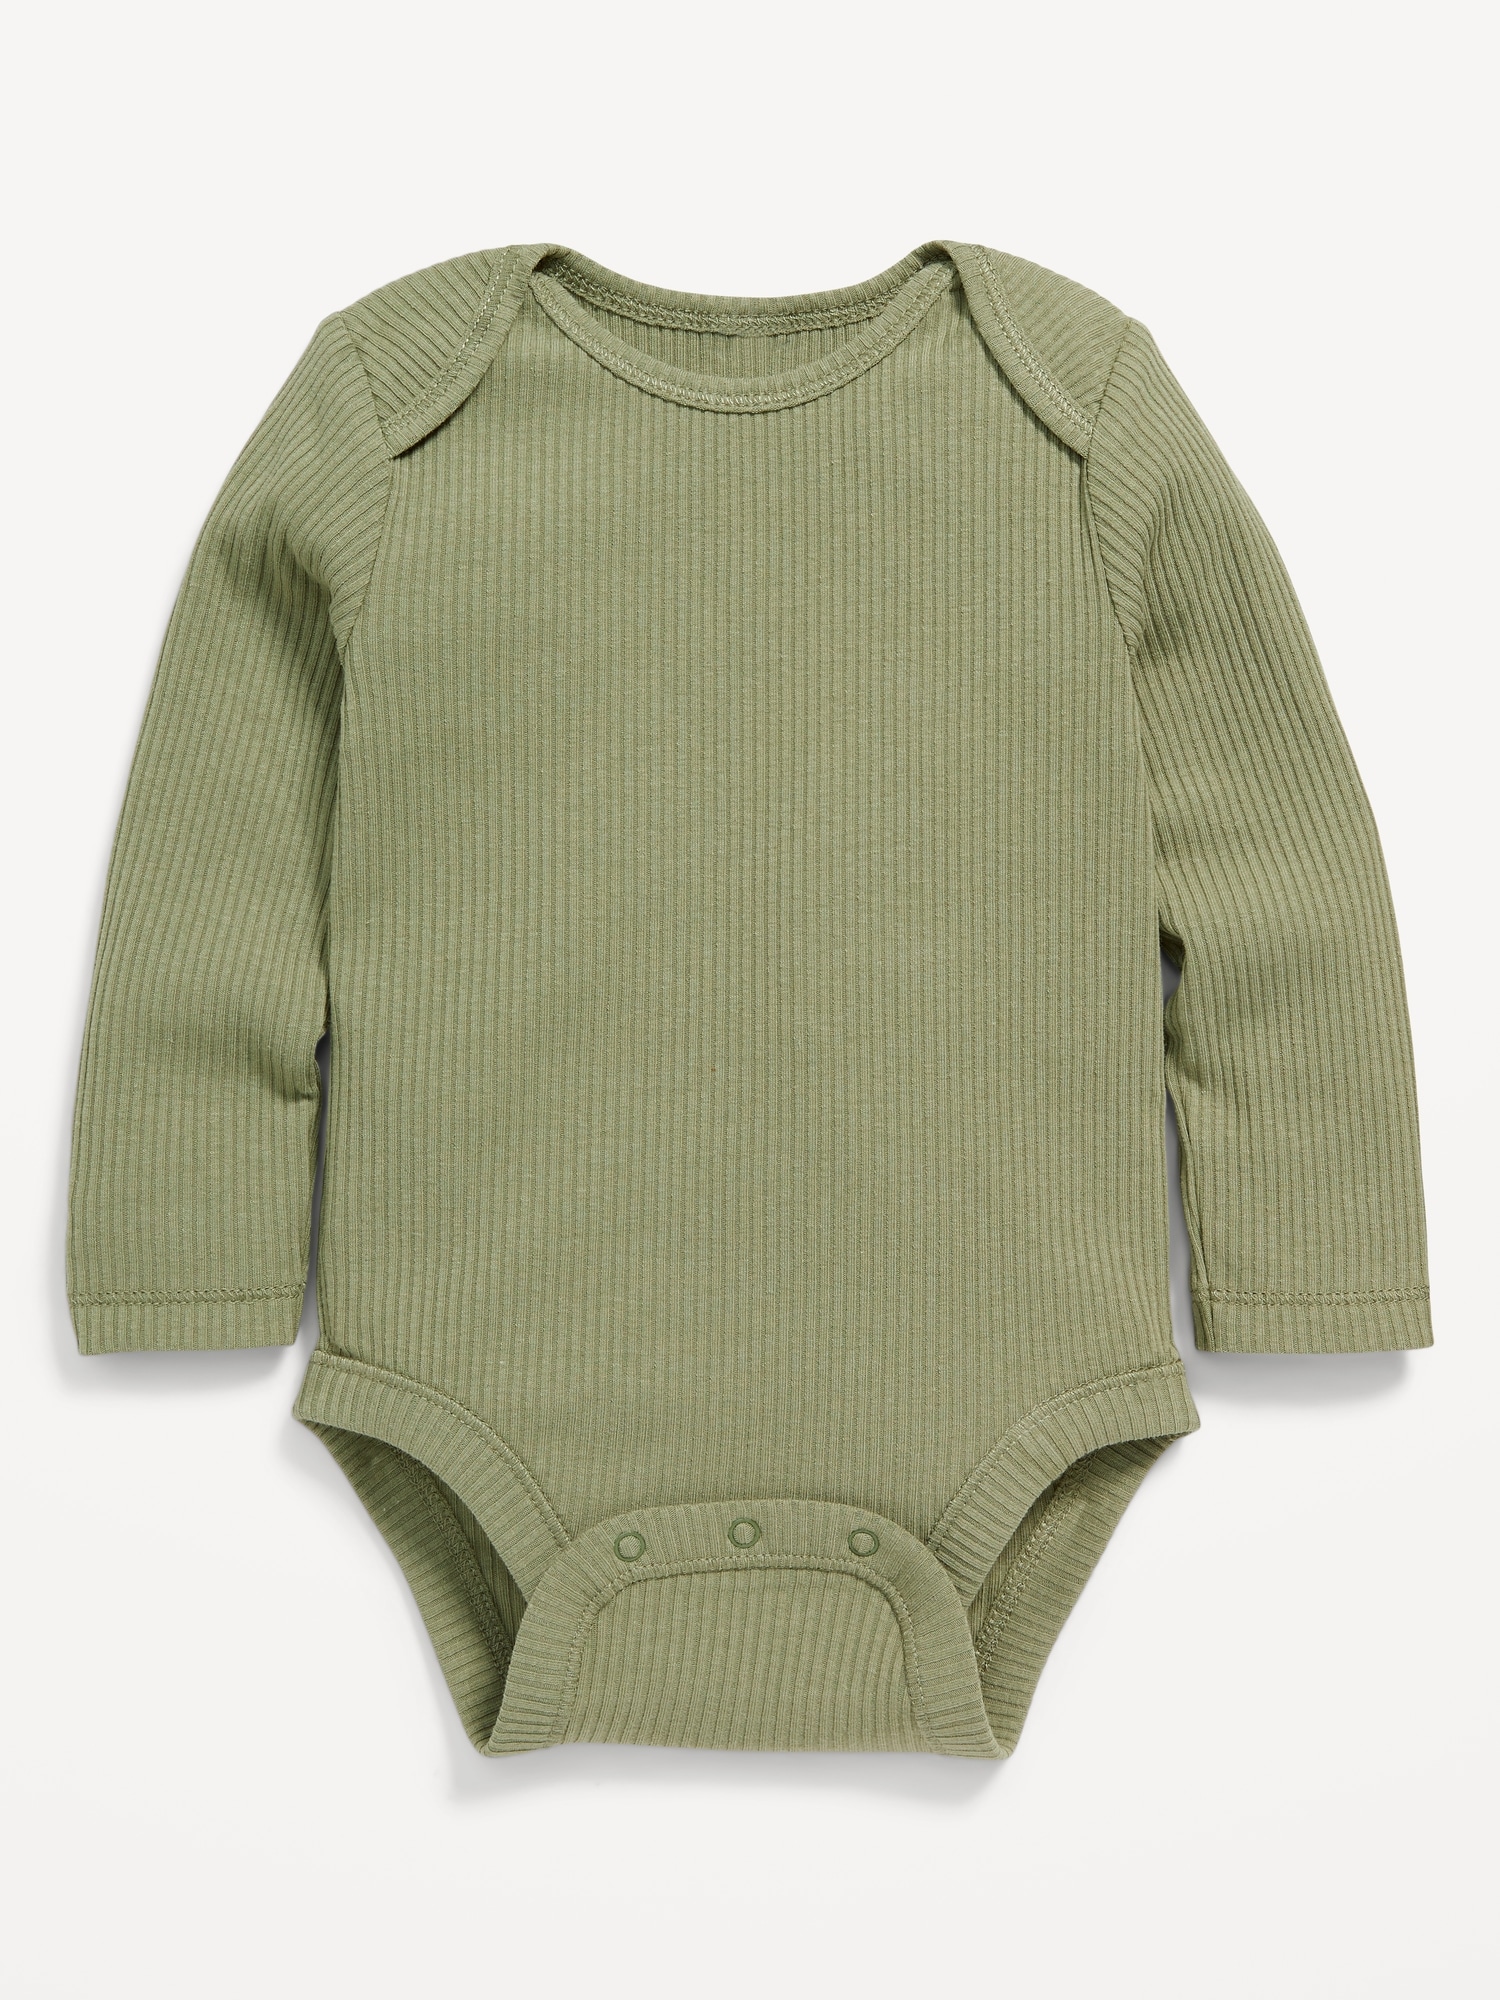 Unisex Long-Sleeve Rib-Knit Bodysuit for Baby